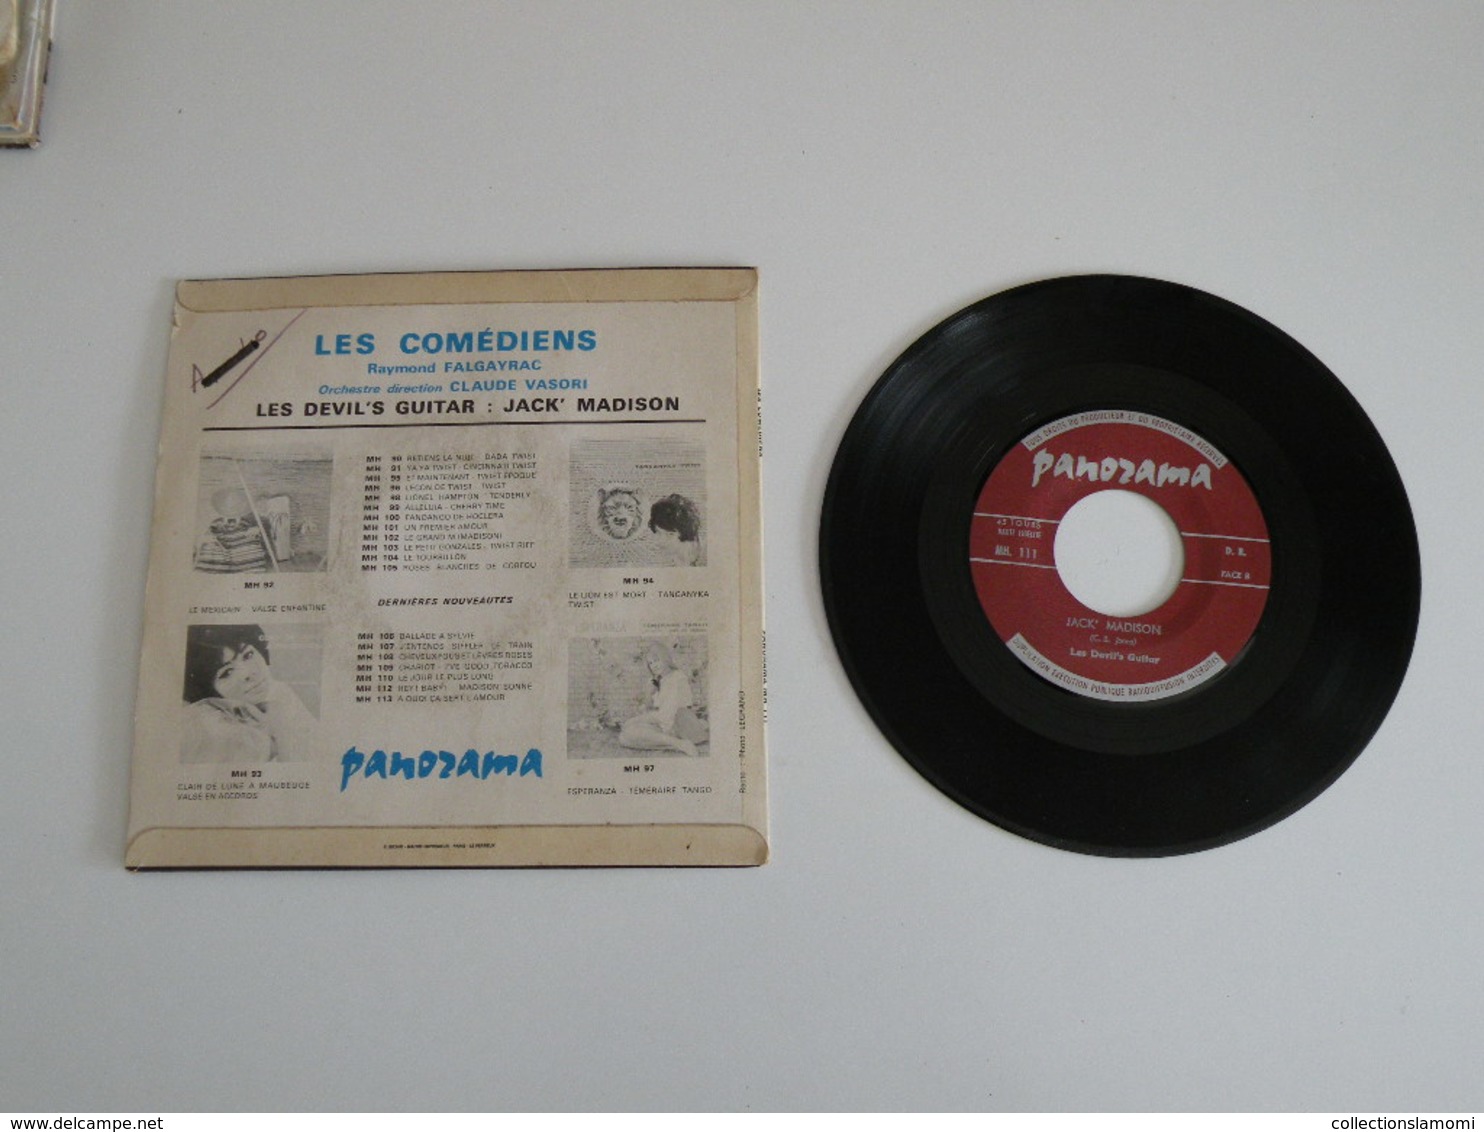 Raymond Falgayrac - Les Comédiens / Jack' Madison (1960)- Vinyle 45 T Panozama - Humour, Cabaret